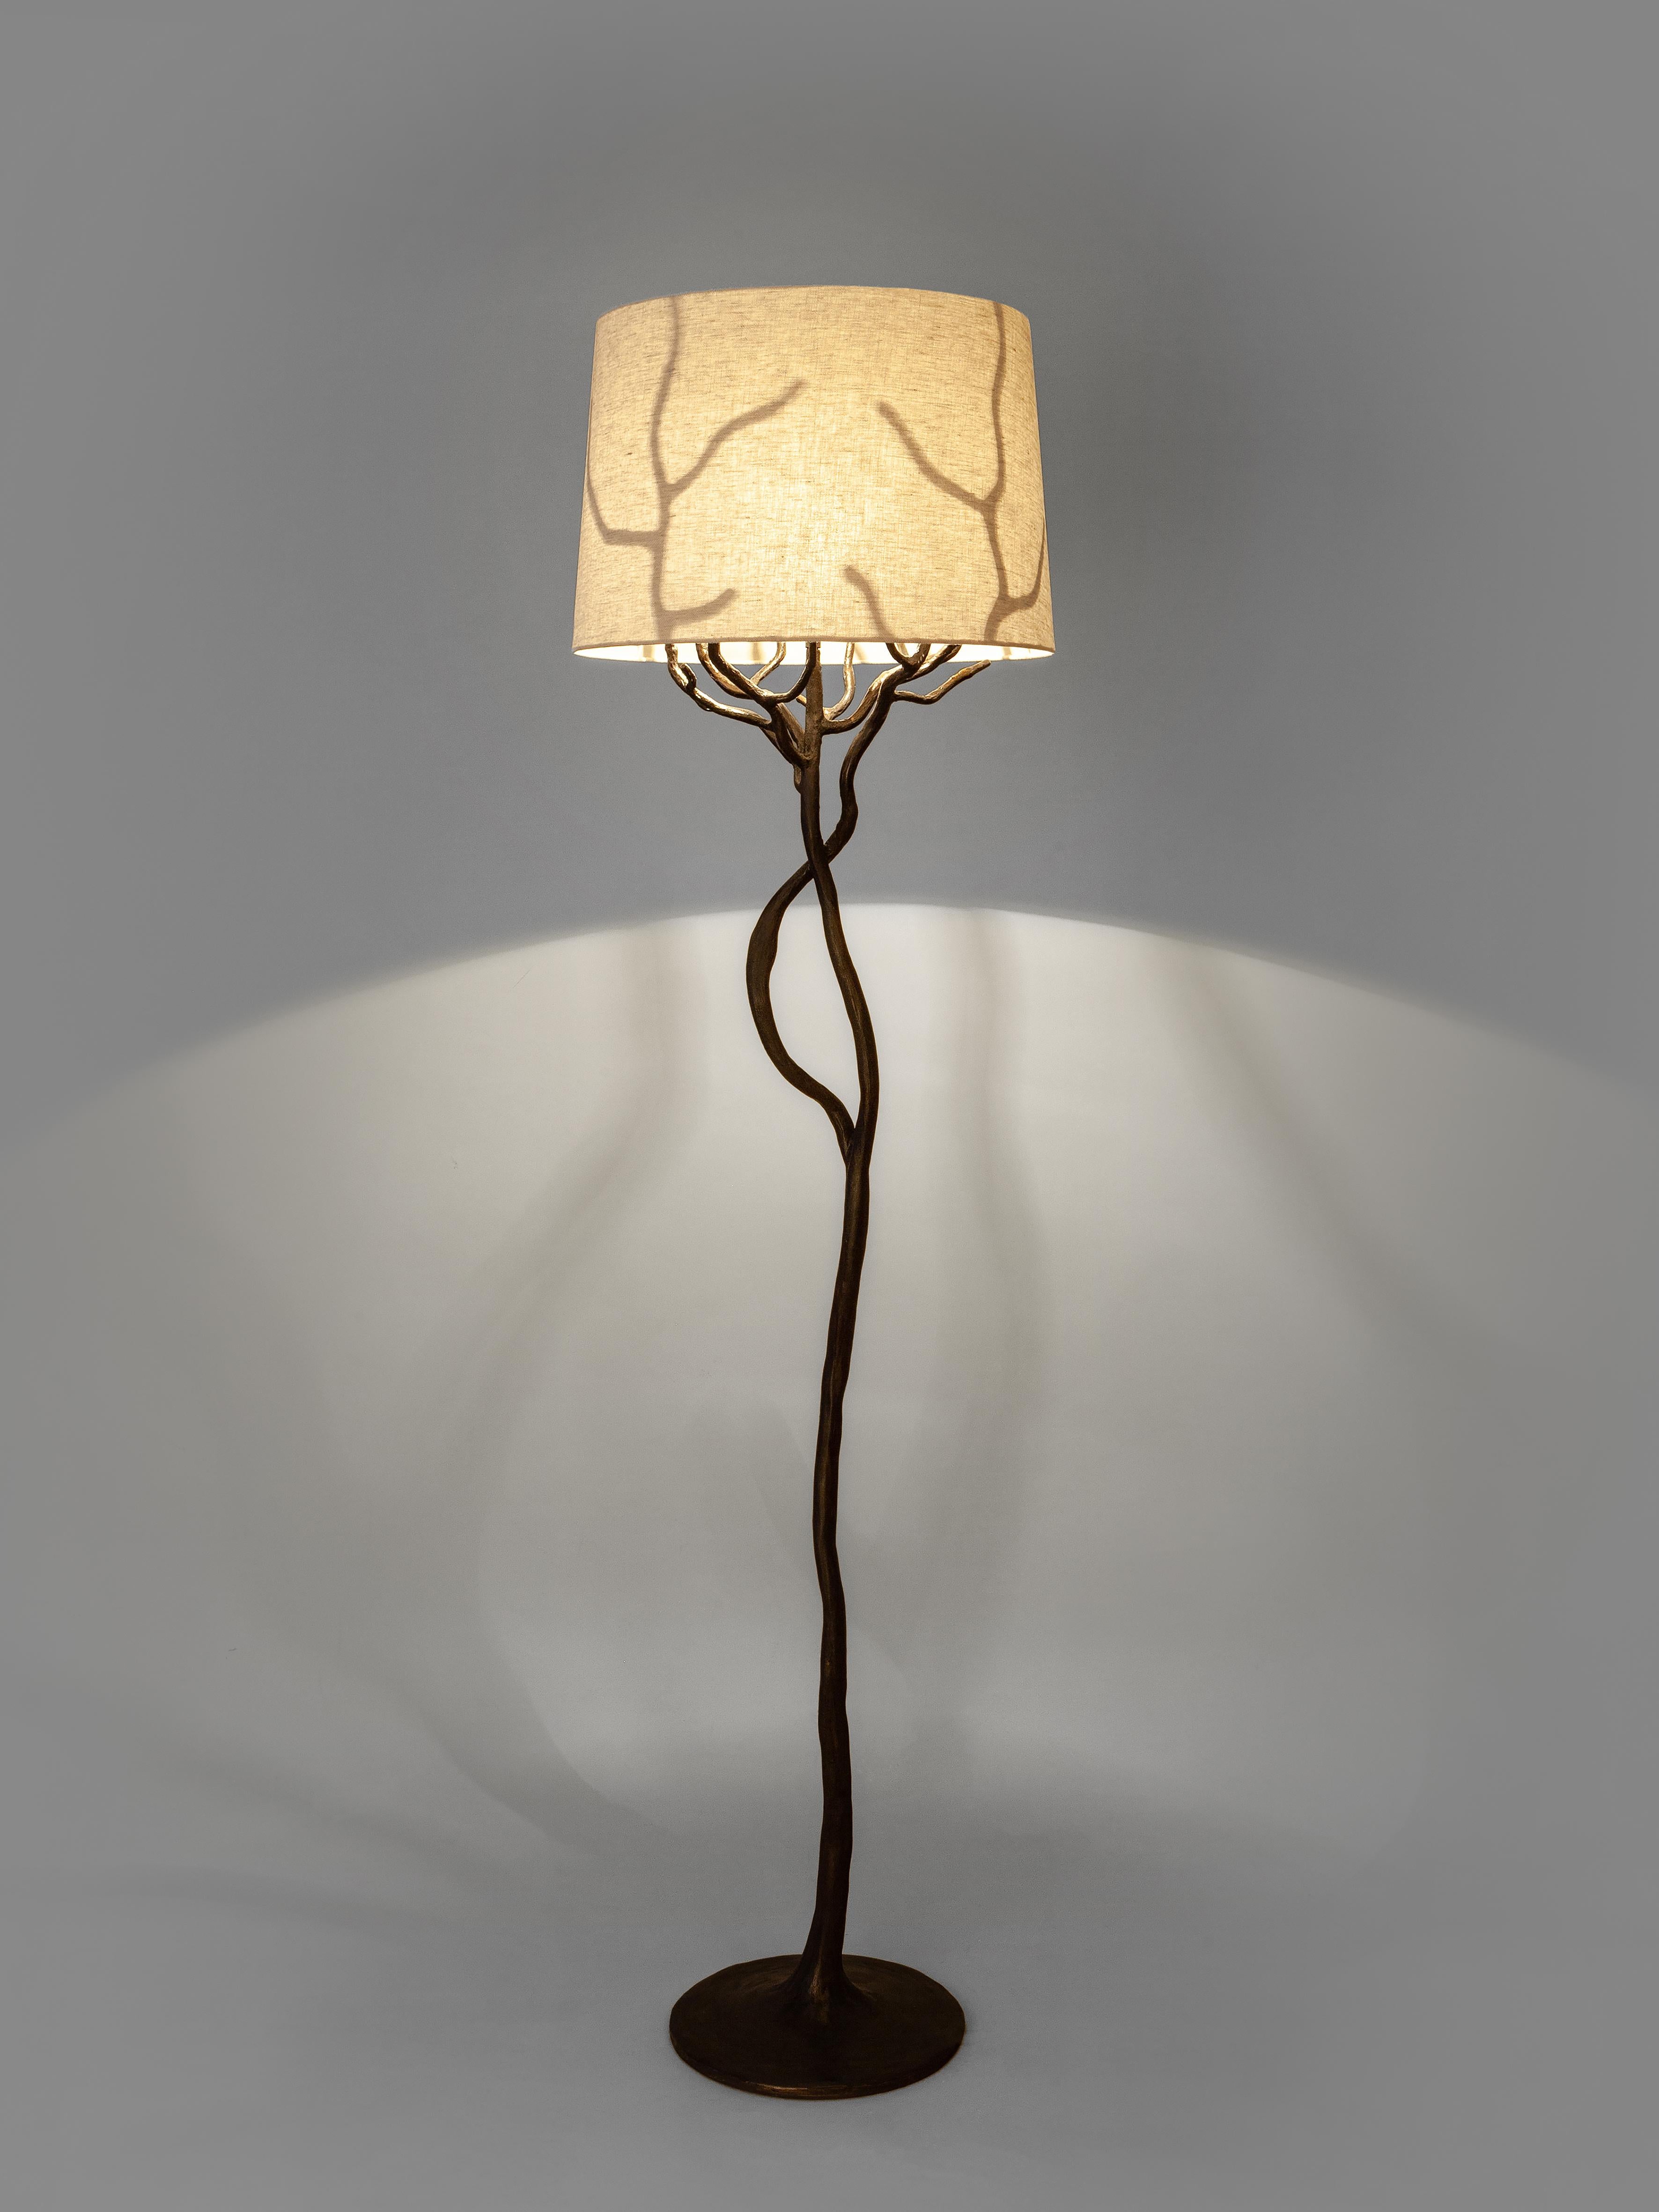 German Organic Floor Lamp “Etna” in Forest Brown Finish, Benediko For Sale